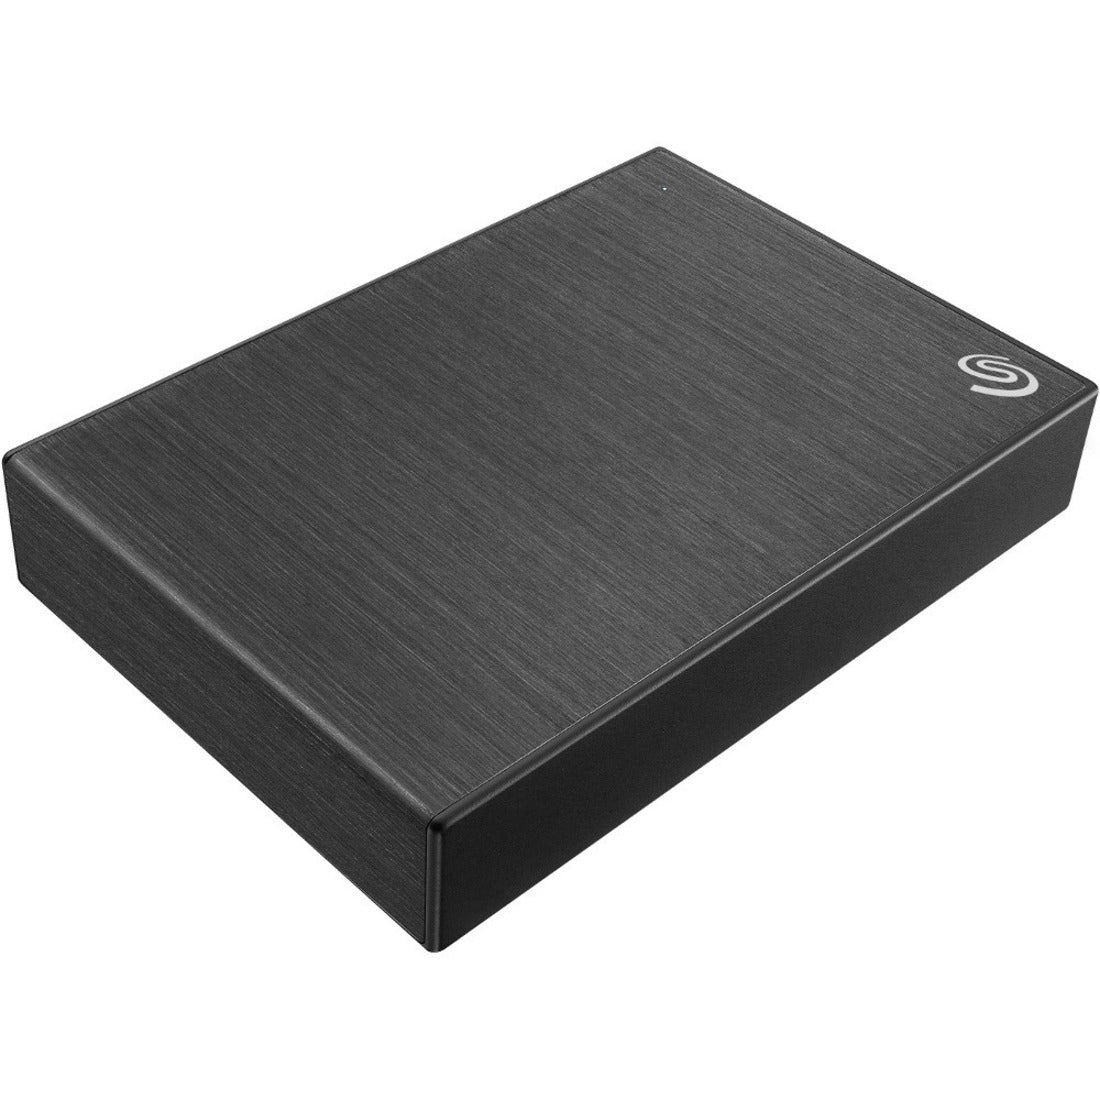 Seagate STLC12000400 One Touch Hard Drive, 12TB, USB 3.0, External, Black